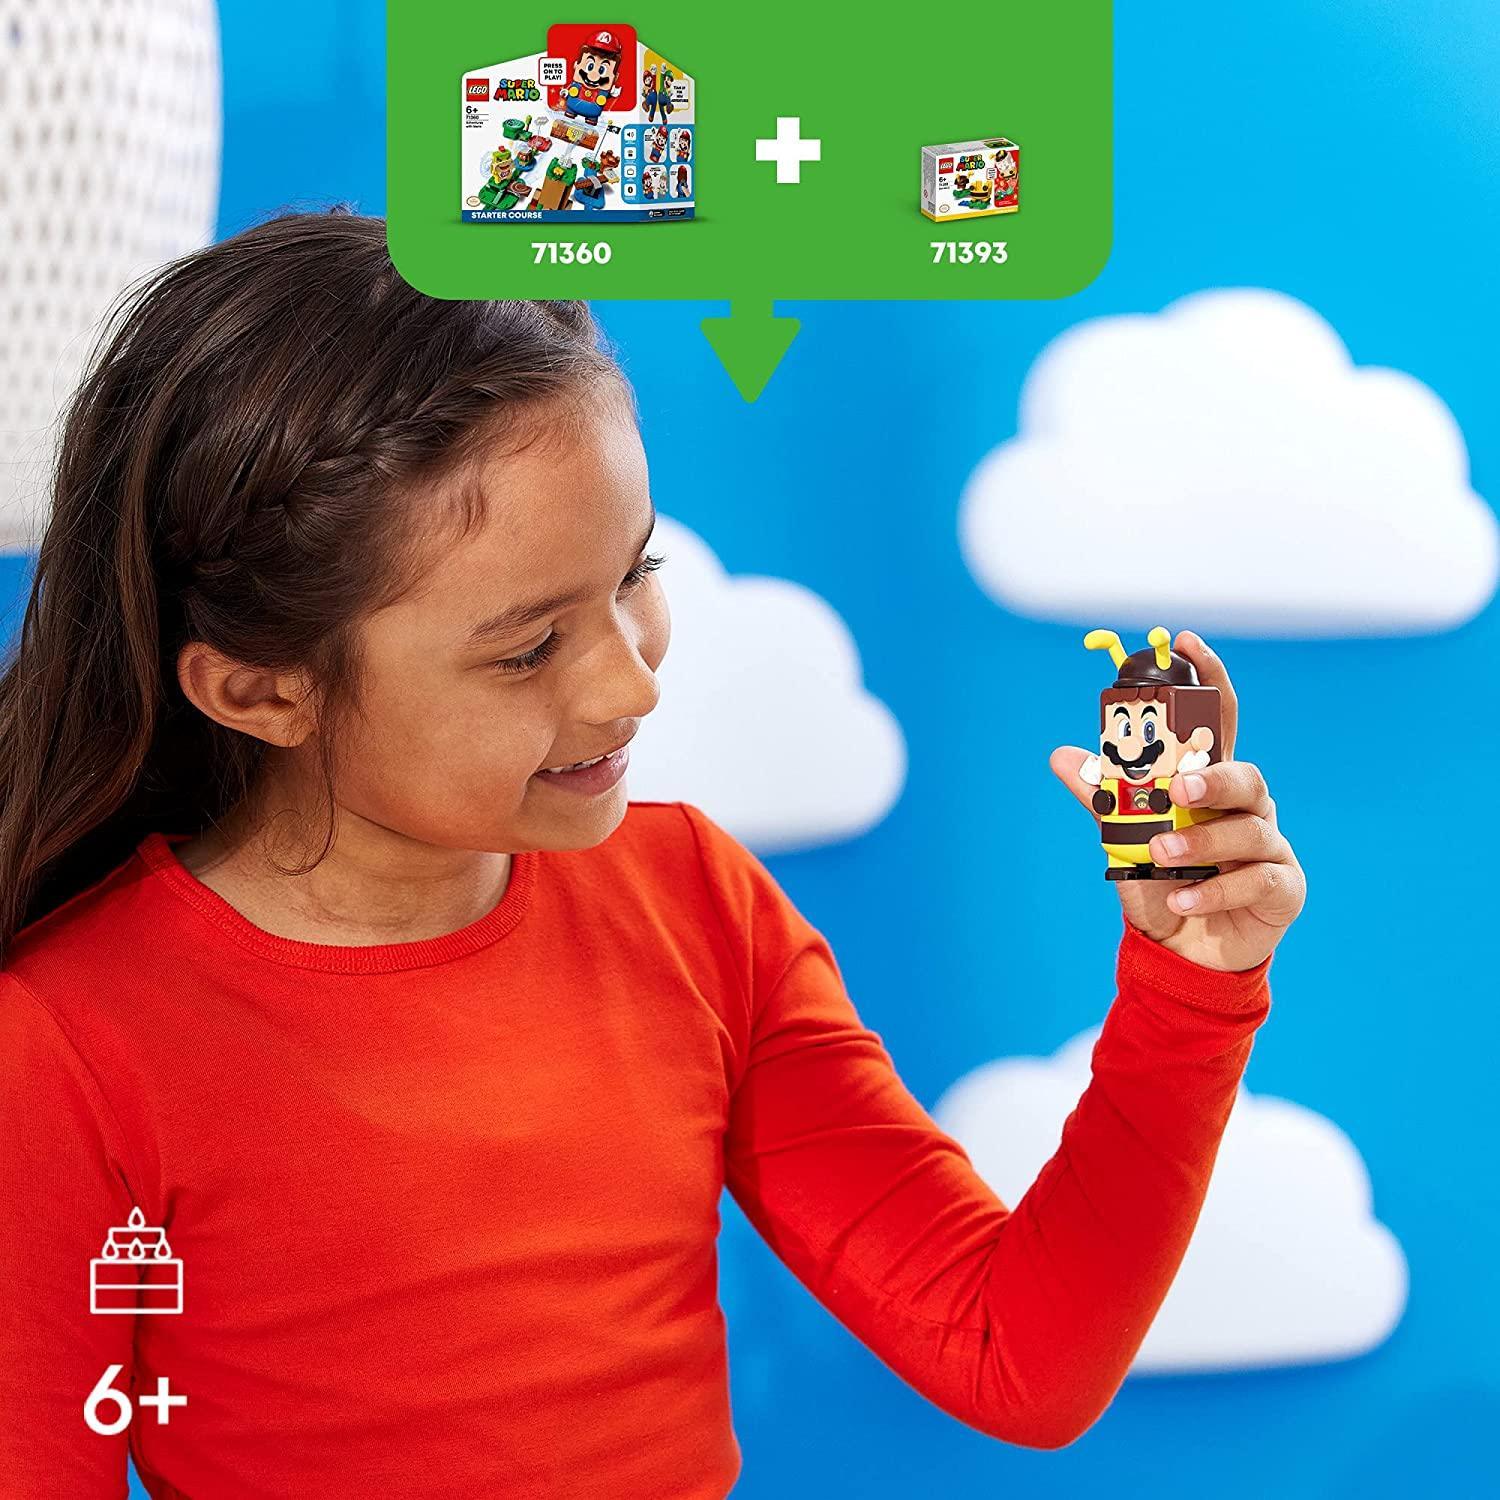 LEGO 71393 Super Mario Bee Mario (Power-Up Pack) Building Kit (13 Pieces) - BumbleToys - 6+ Years, Boys, Girls, Lego, OXE, Super Mario